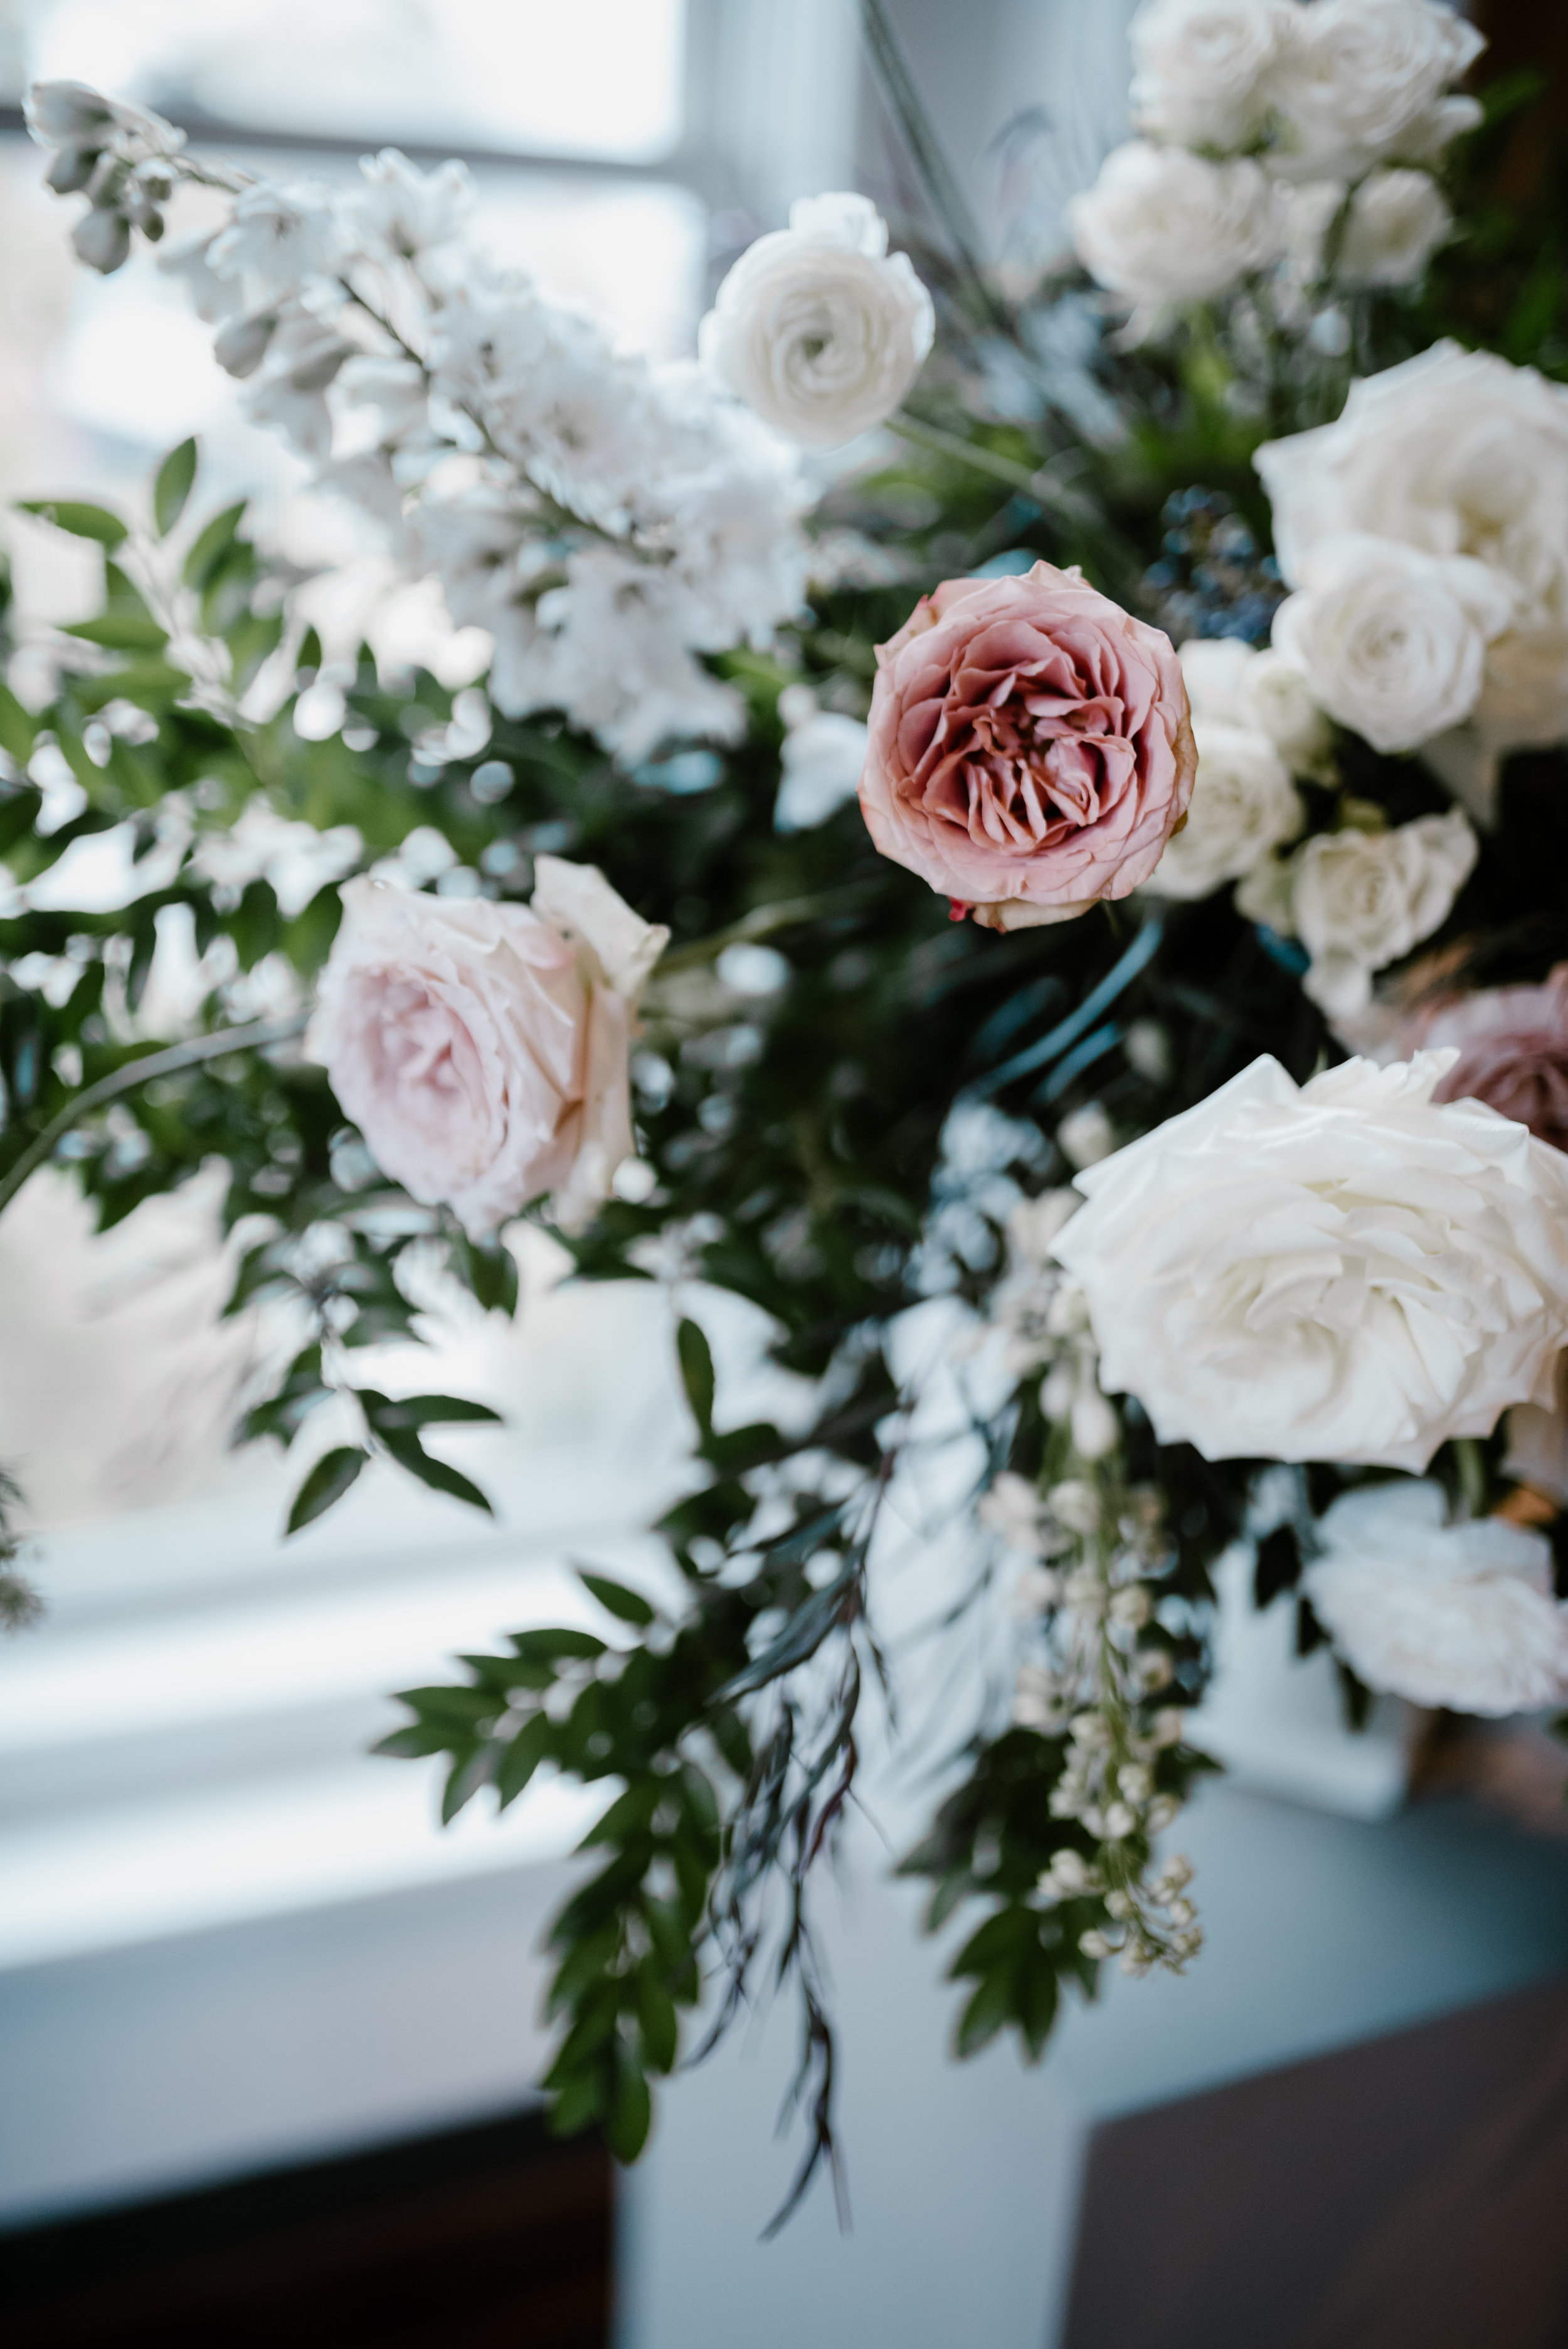 Muted, organic flowers using white garden roses, ranunculus, and lush greenery // Southeastern Wedding Floral Design